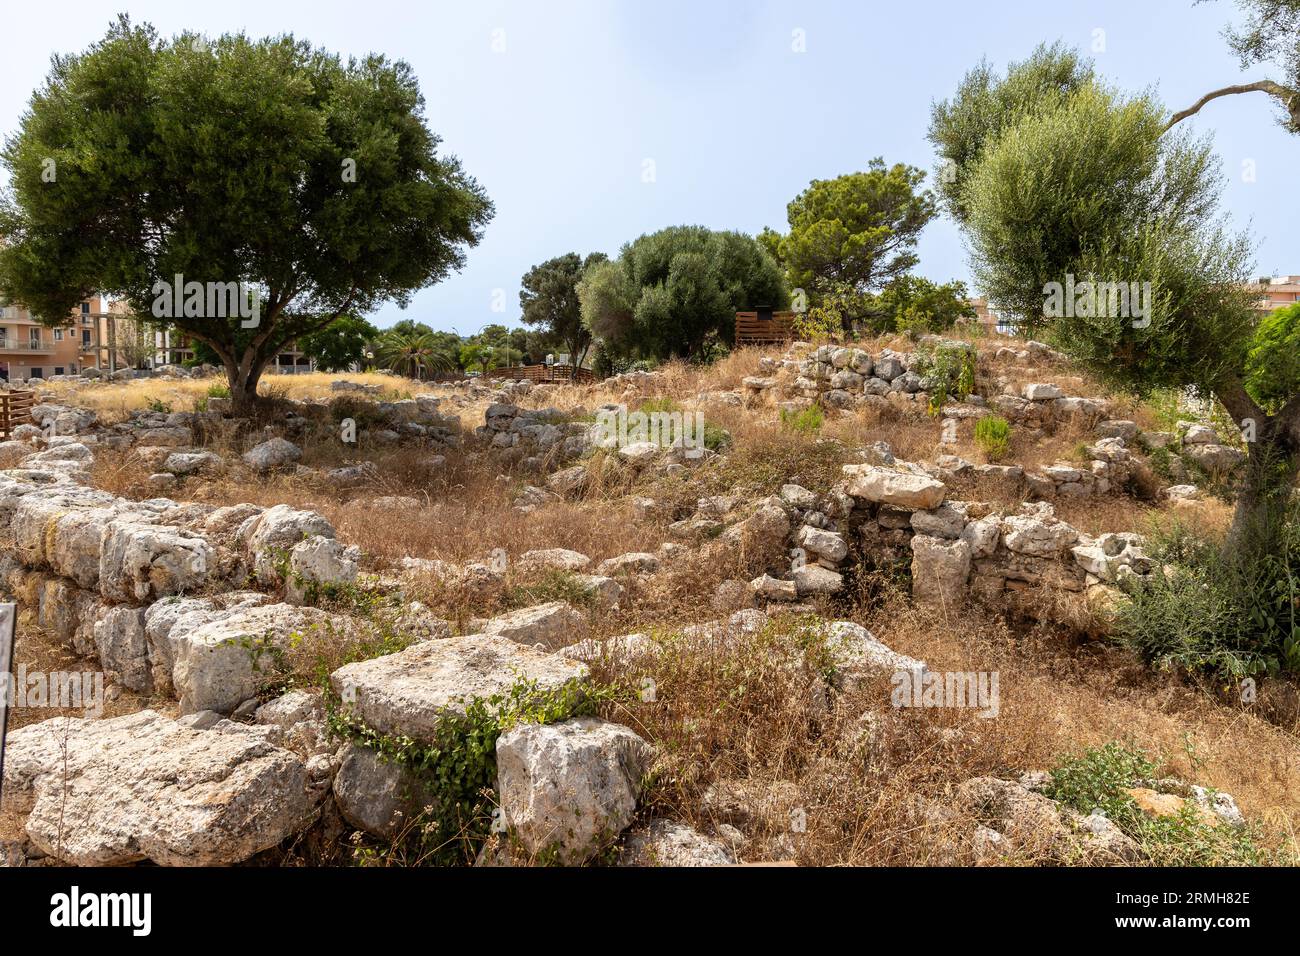 Ruins of a talaoitic sttlement in S'illot, Majorca Stock Photo